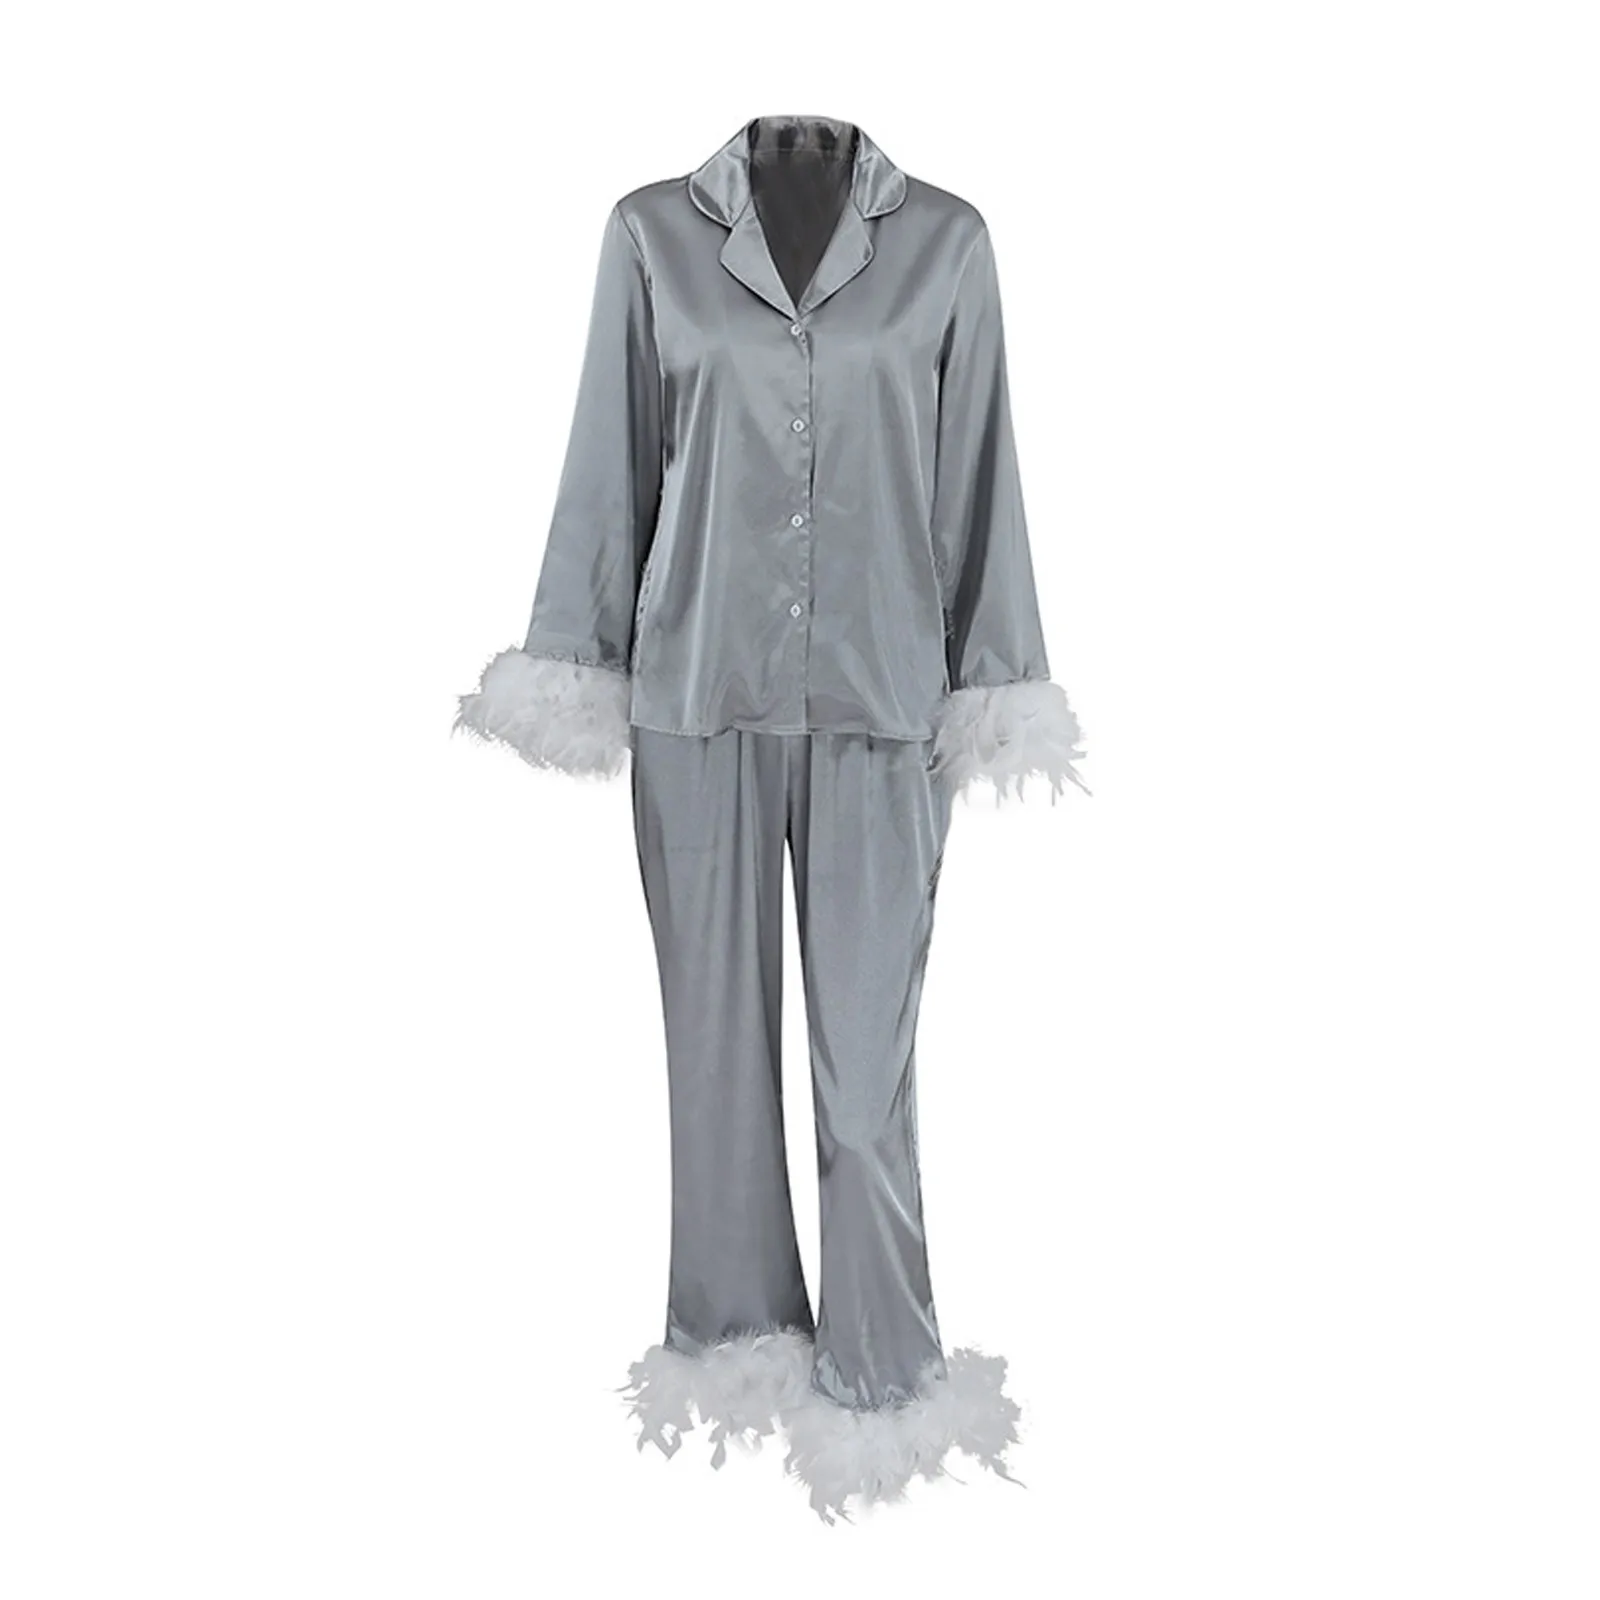 

Pyjama Sets For Women Soft Solid Color Two Piece Loungewear Sets Long Sleeve Lapel Tops Long Pants Matching Pyjamas Nightwear